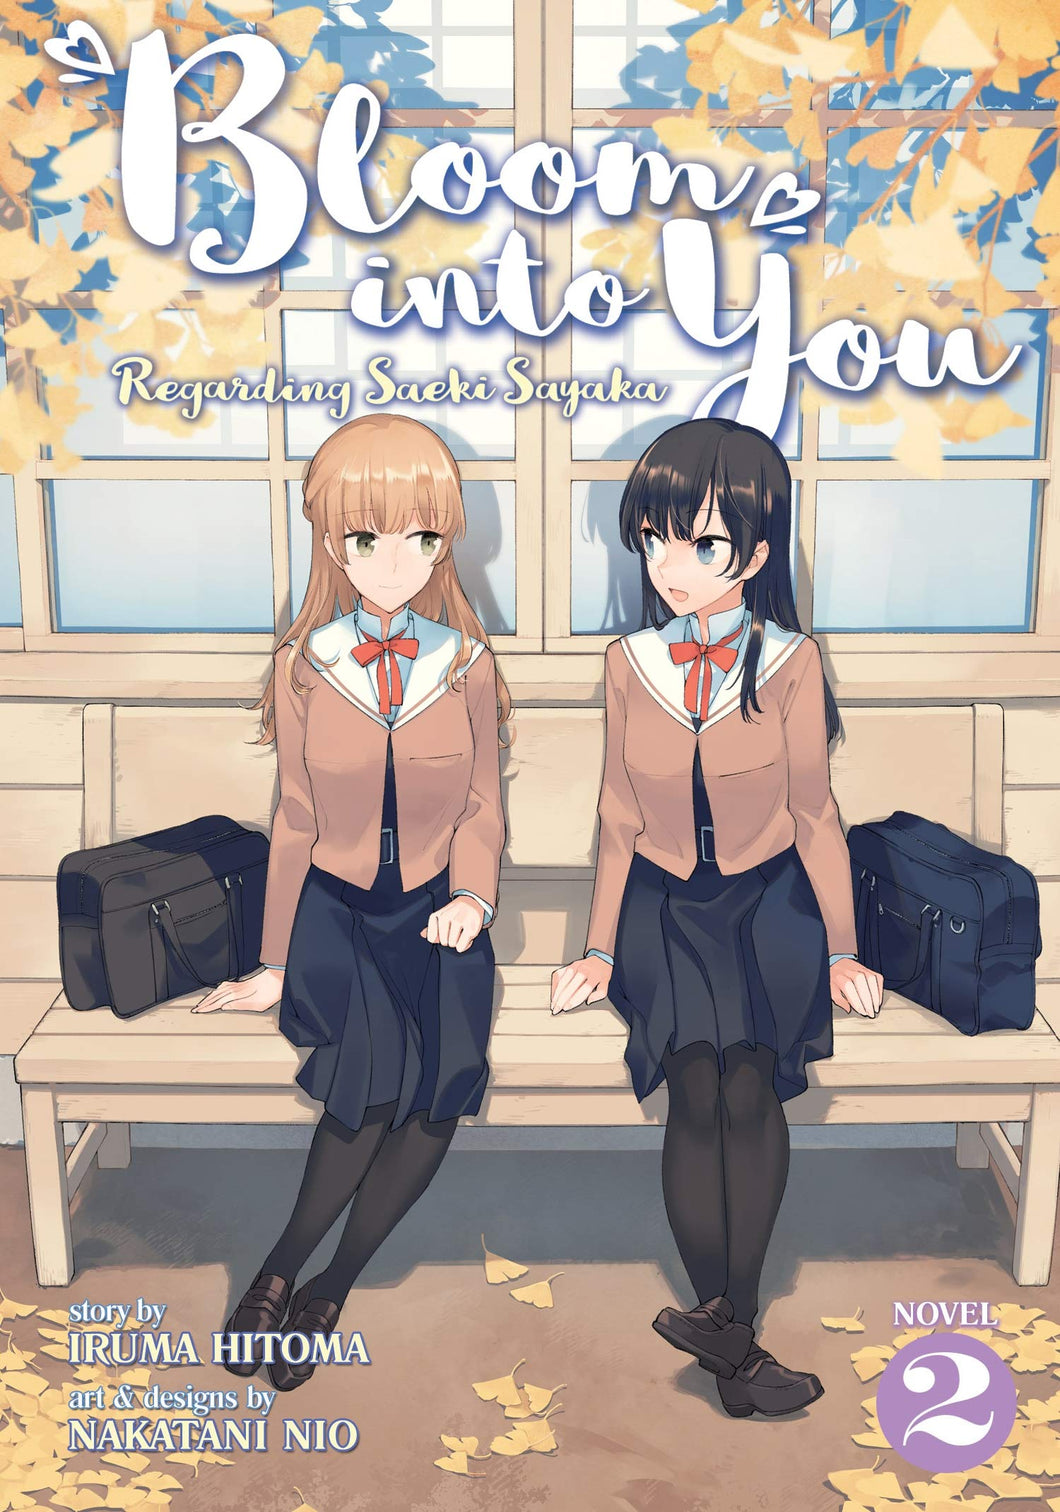 Bloom Into You Light Novel Regarding Saeki Sayaka Volume 2